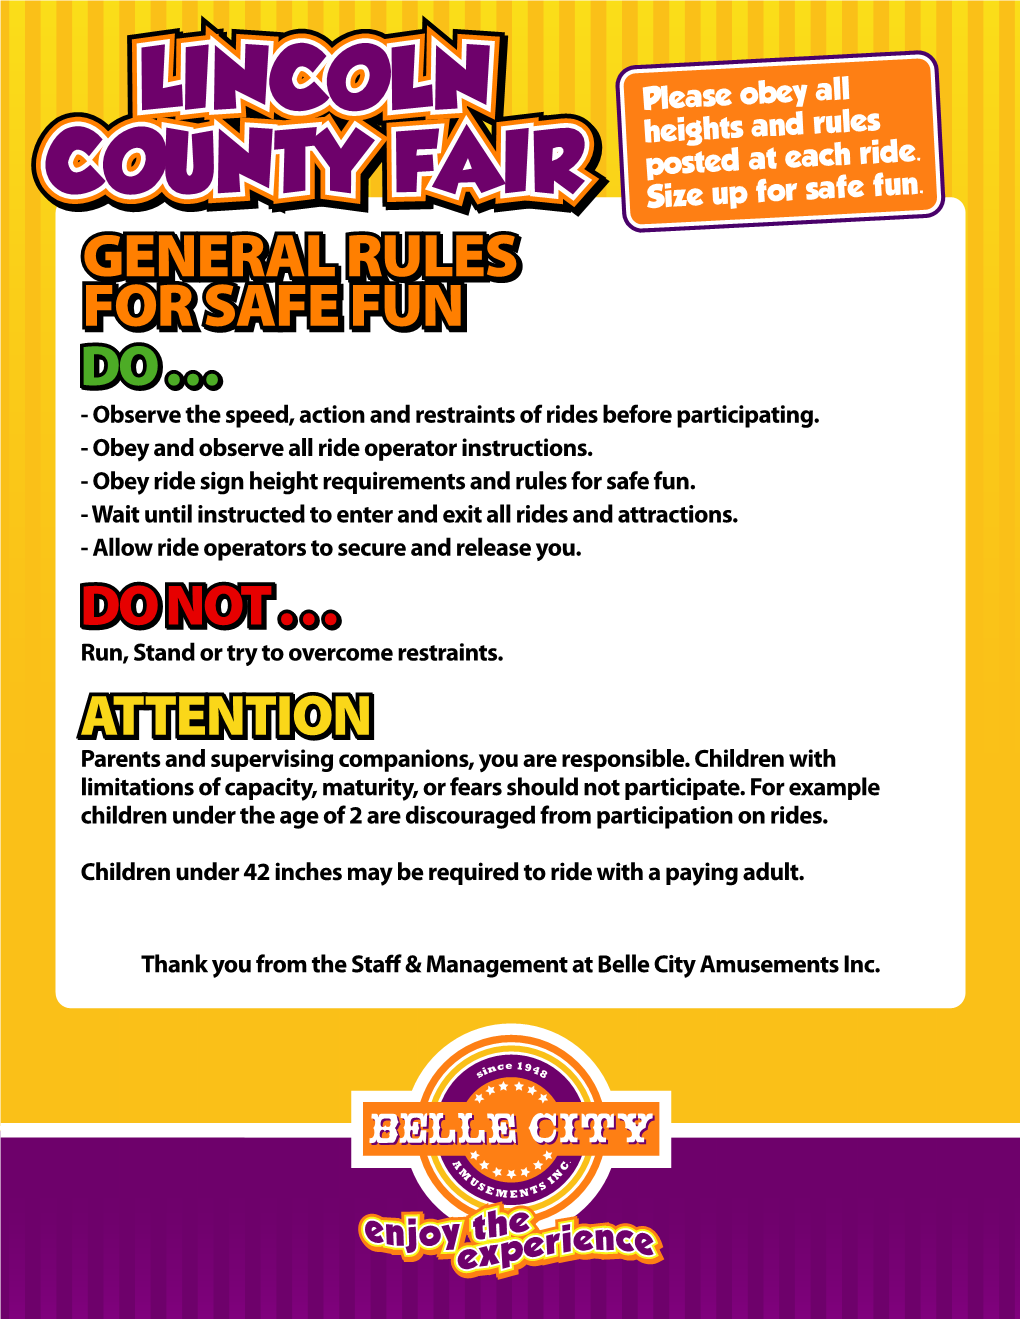 Lincoln County Fair